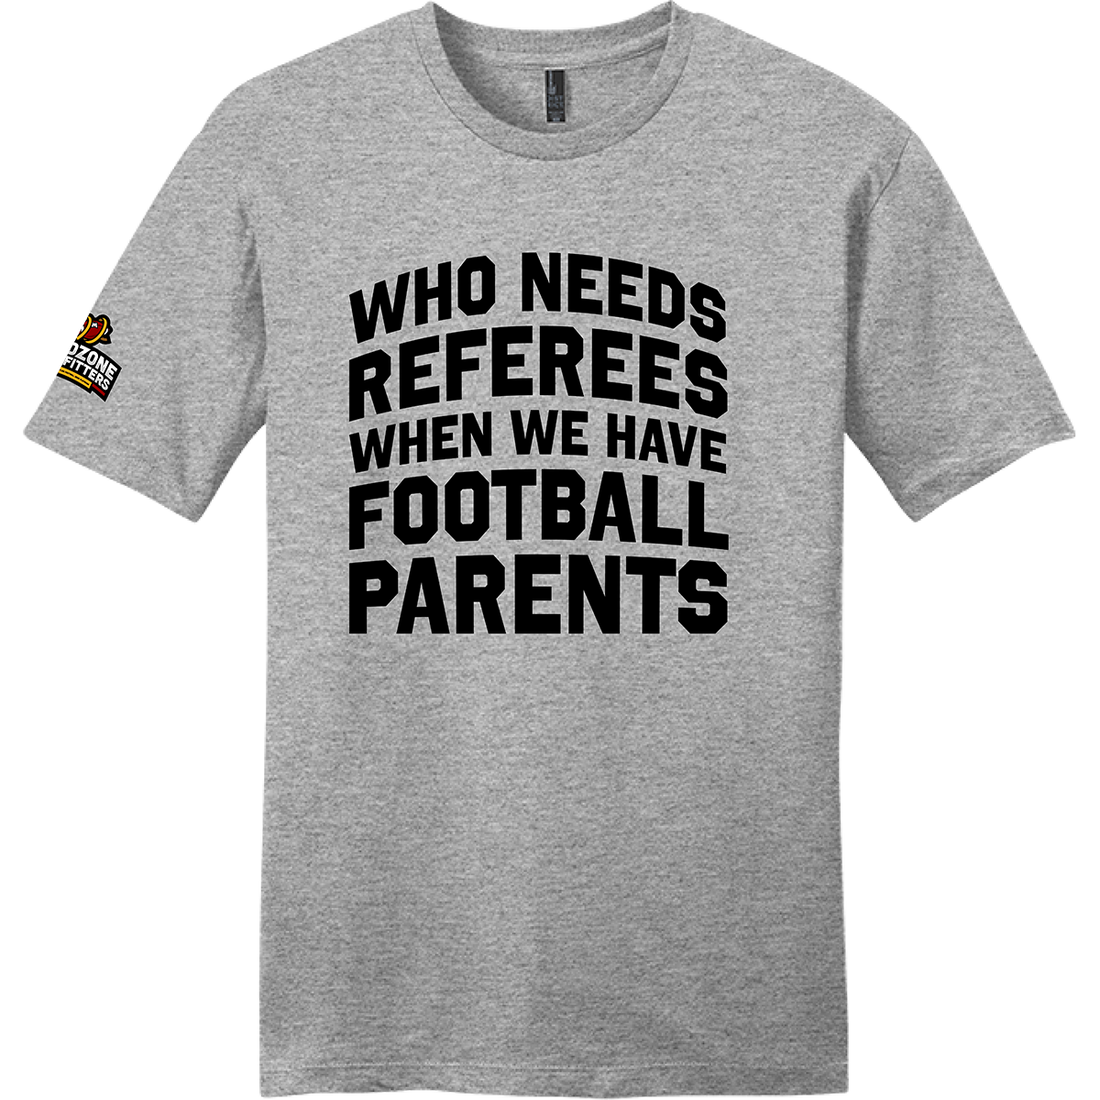 Football Parents - Short Sleeve Shirt